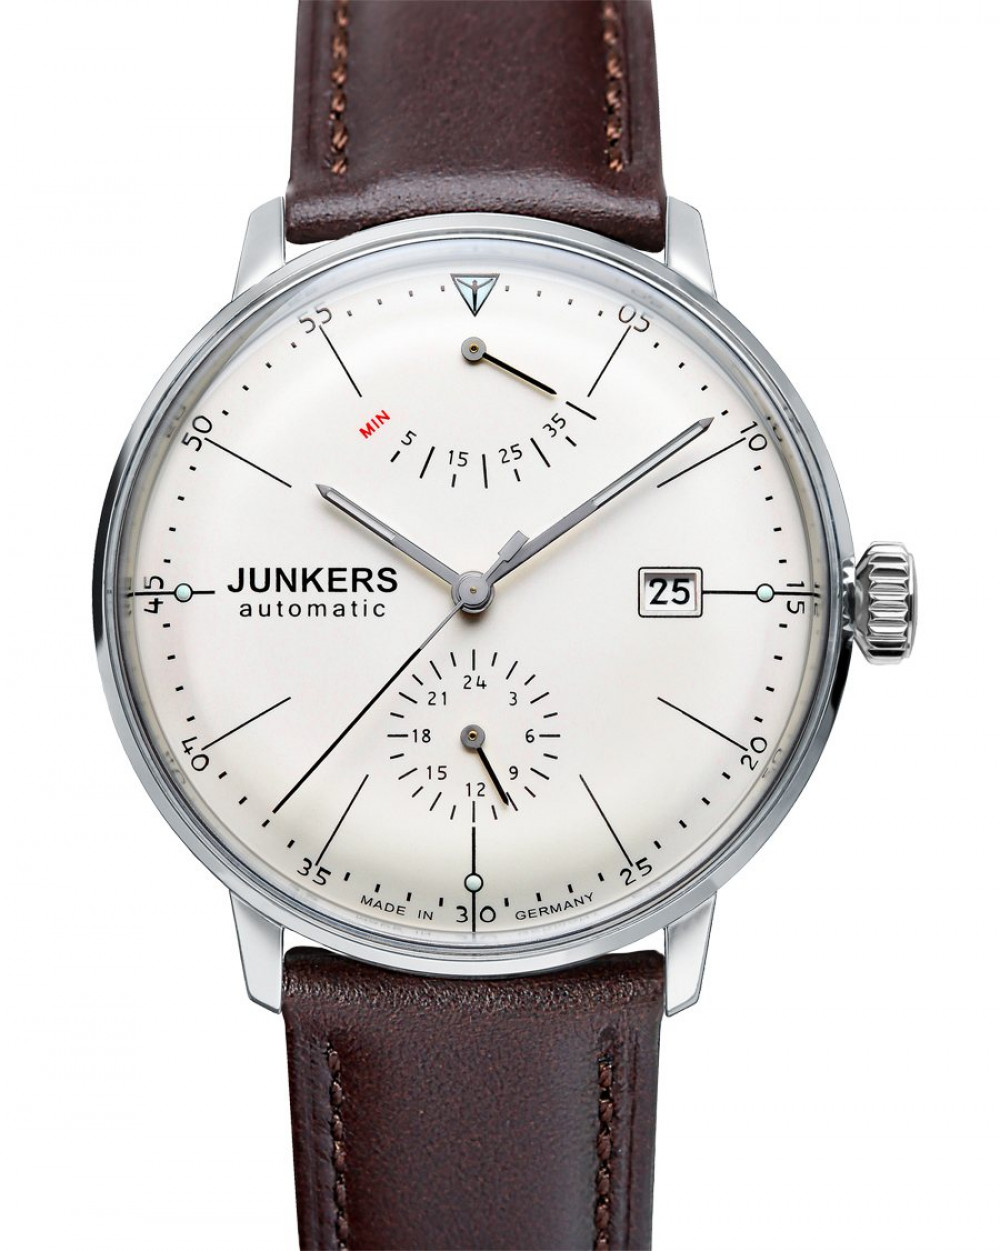 Zegarek firmy Junkers, model Bauhaus Automatik Gangreserve